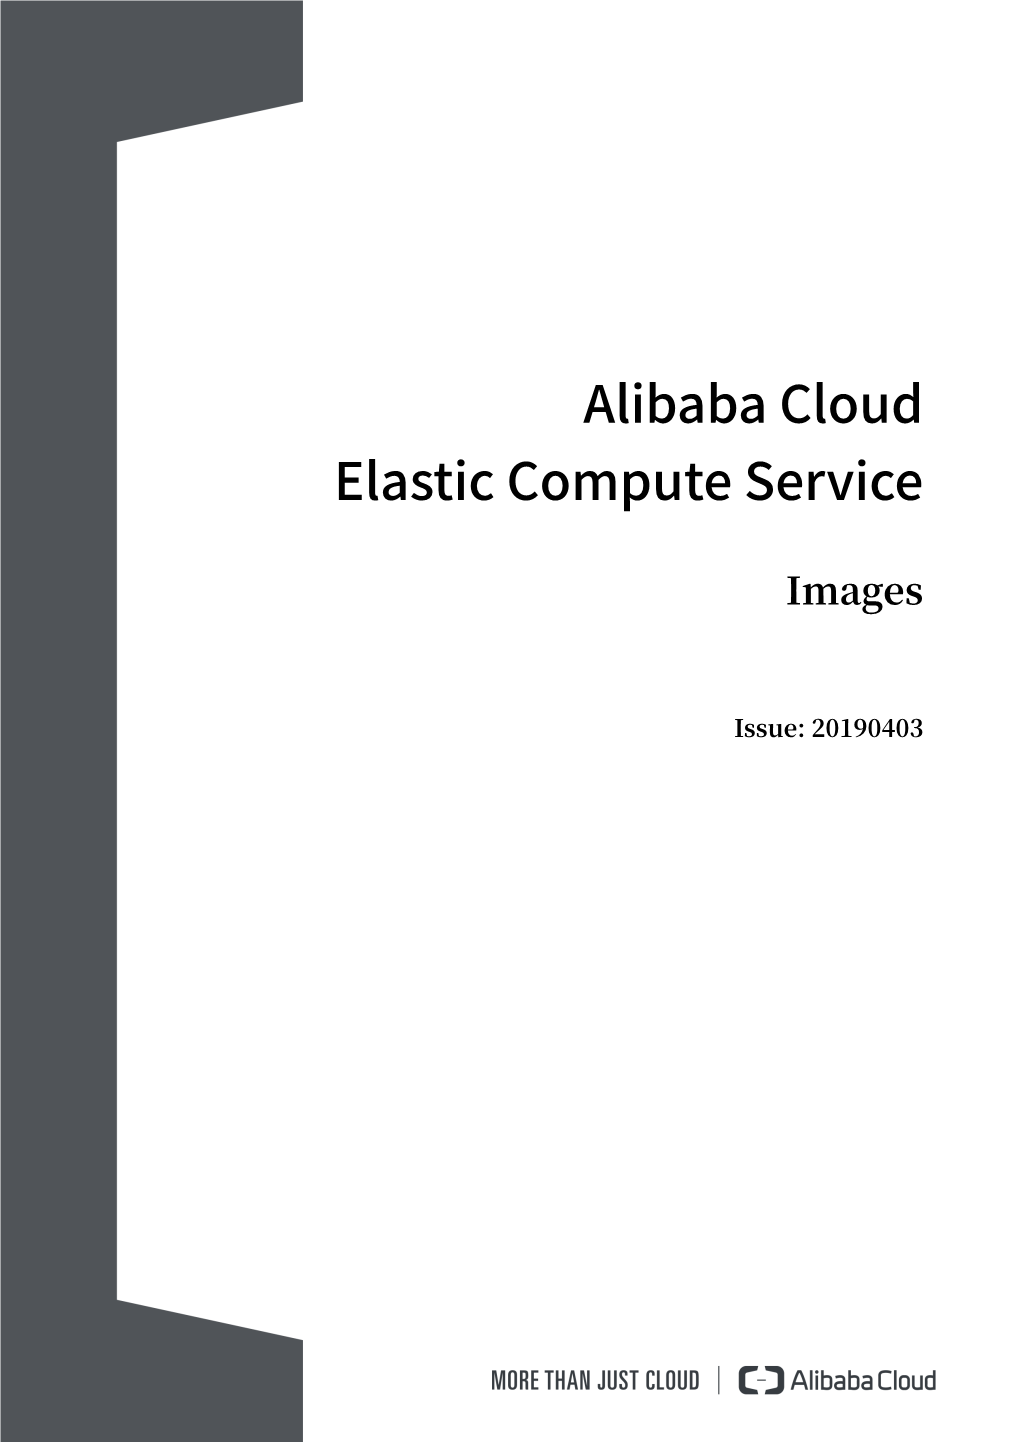 Alibaba Cloud Elastic Compute Service